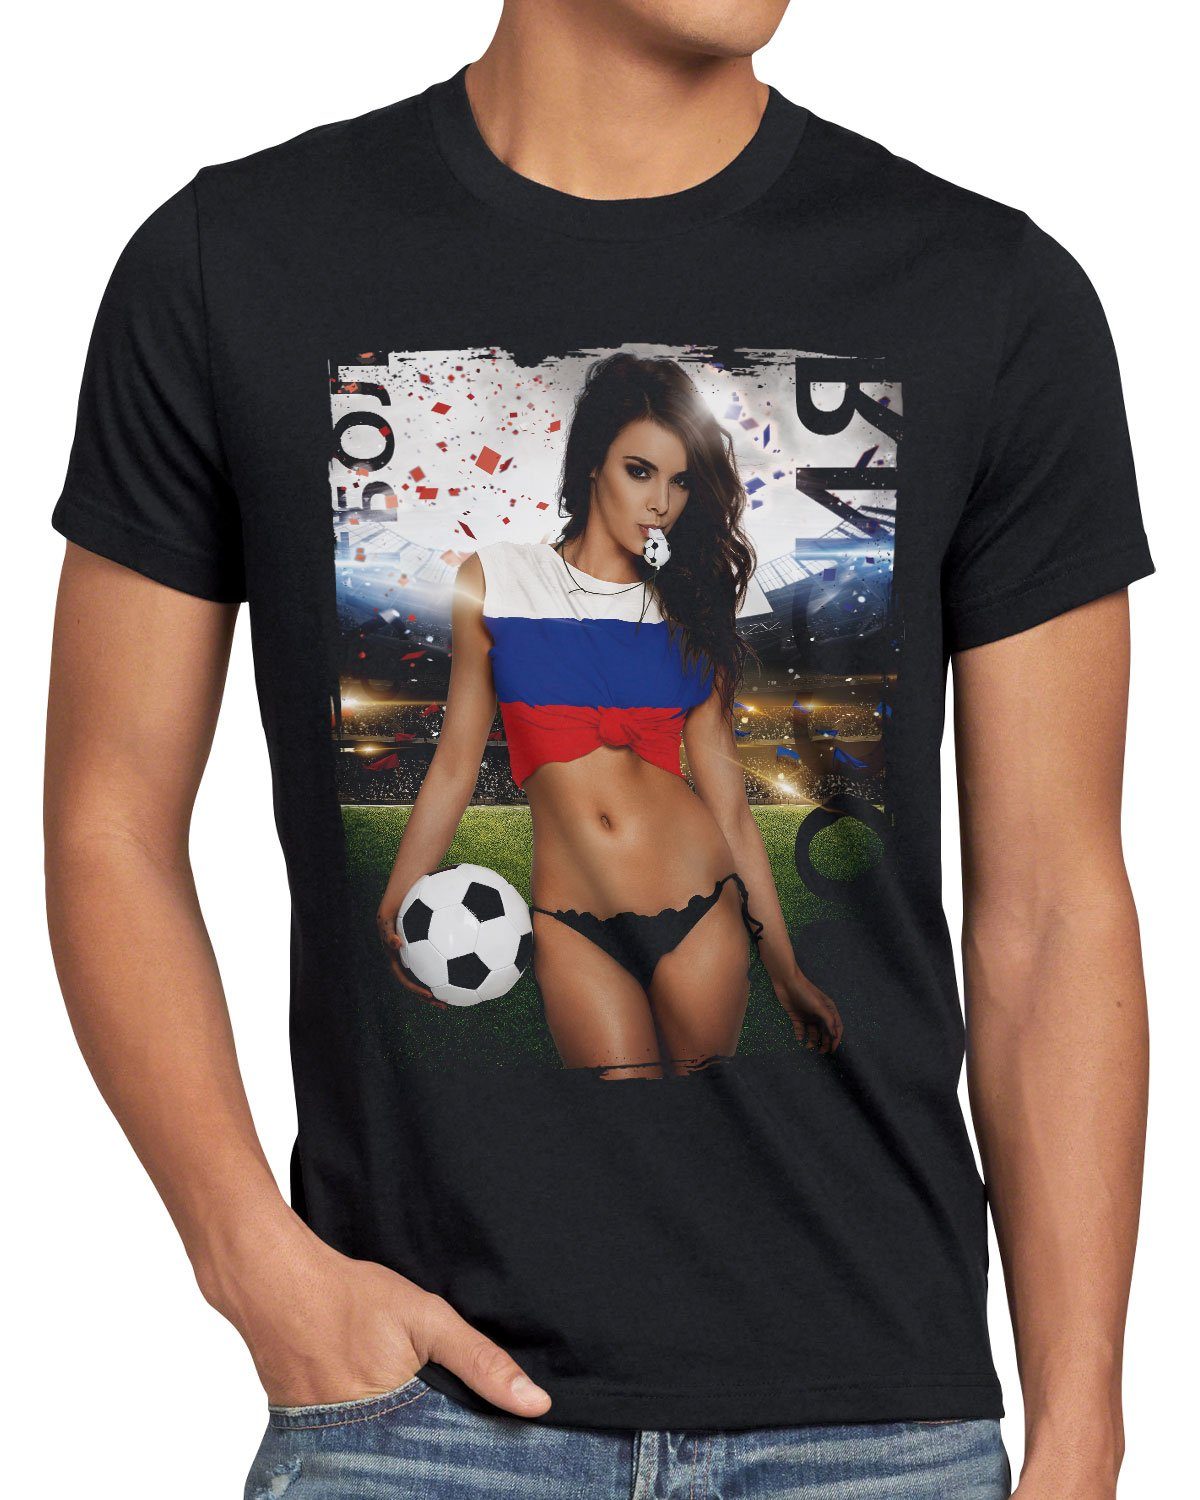 Trikot T-Shirt EM Germany Schwarz 2022 Girl Fußball Soccer Herren Print-Shirt style3 Deutschland